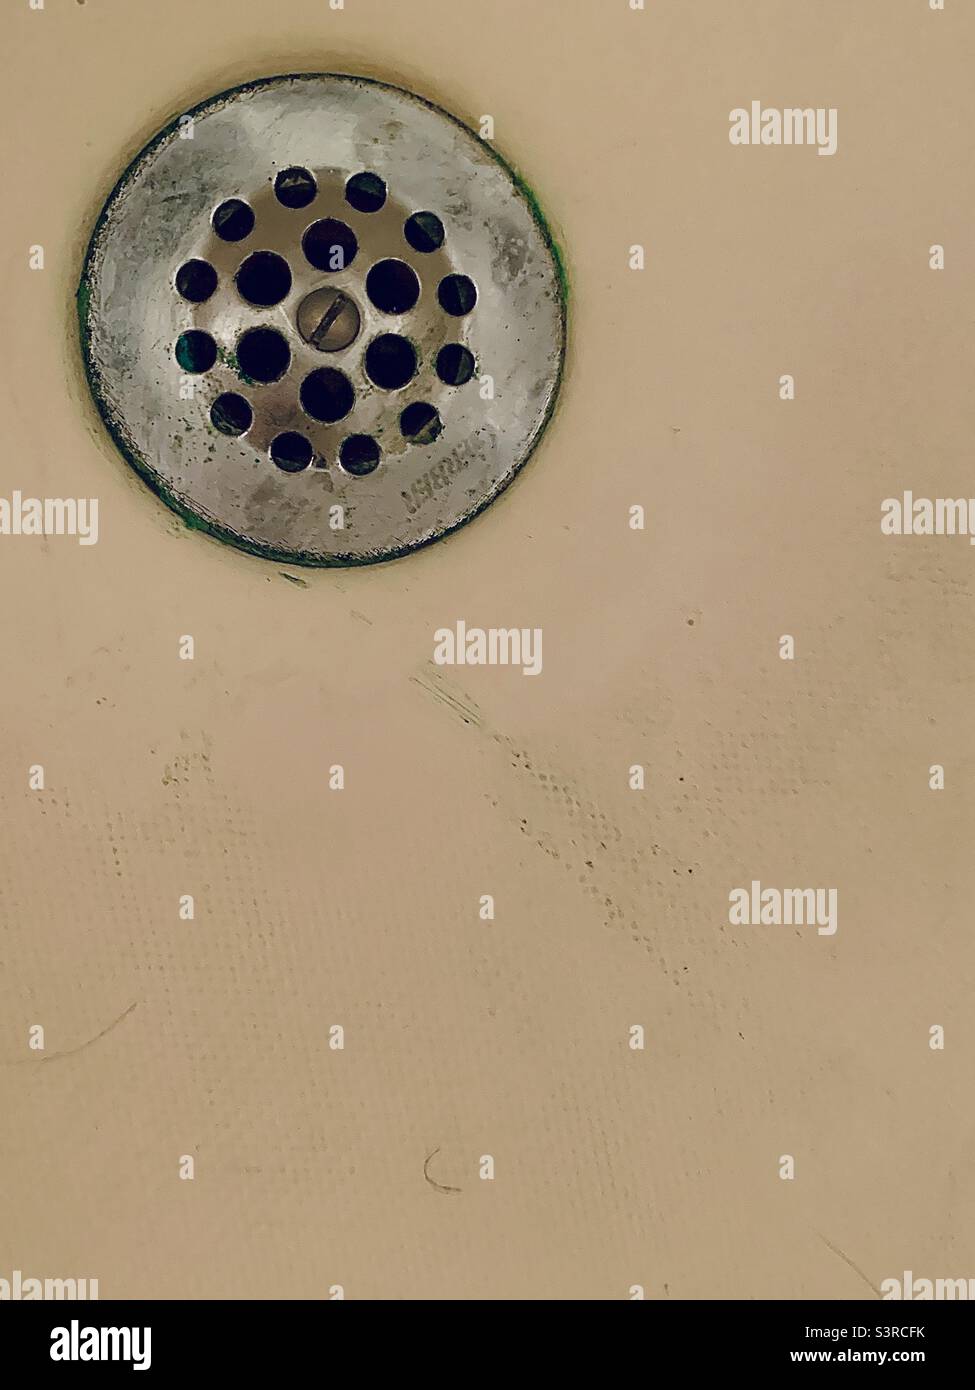 https://c8.alamy.com/comp/S3RCFK/silver-bathtub-drain-on-white-with-negative-space-S3RCFK.jpg